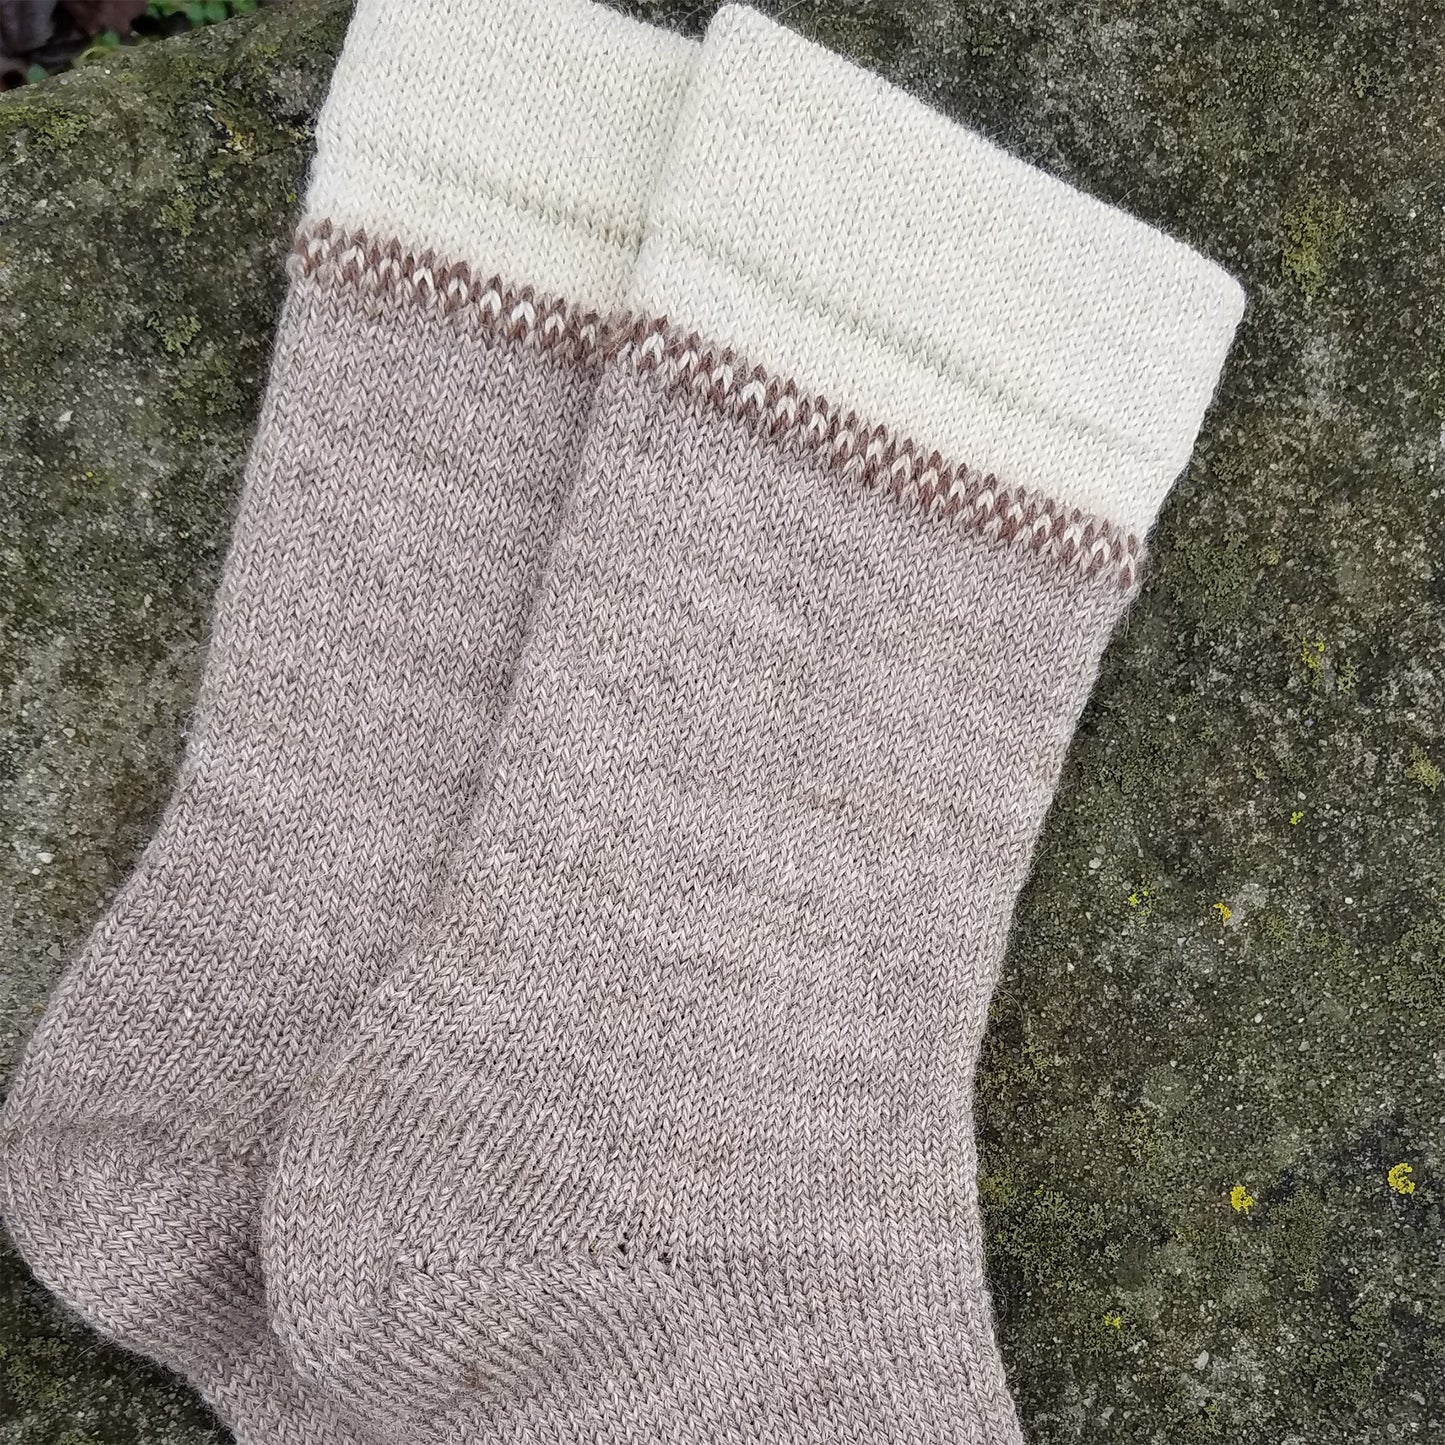 United States, Kathleen Oliver / Sweet Tree Hill Farm, Shepherd’s Socks in Shetland Wool with Dappled Fair Isle Cuff